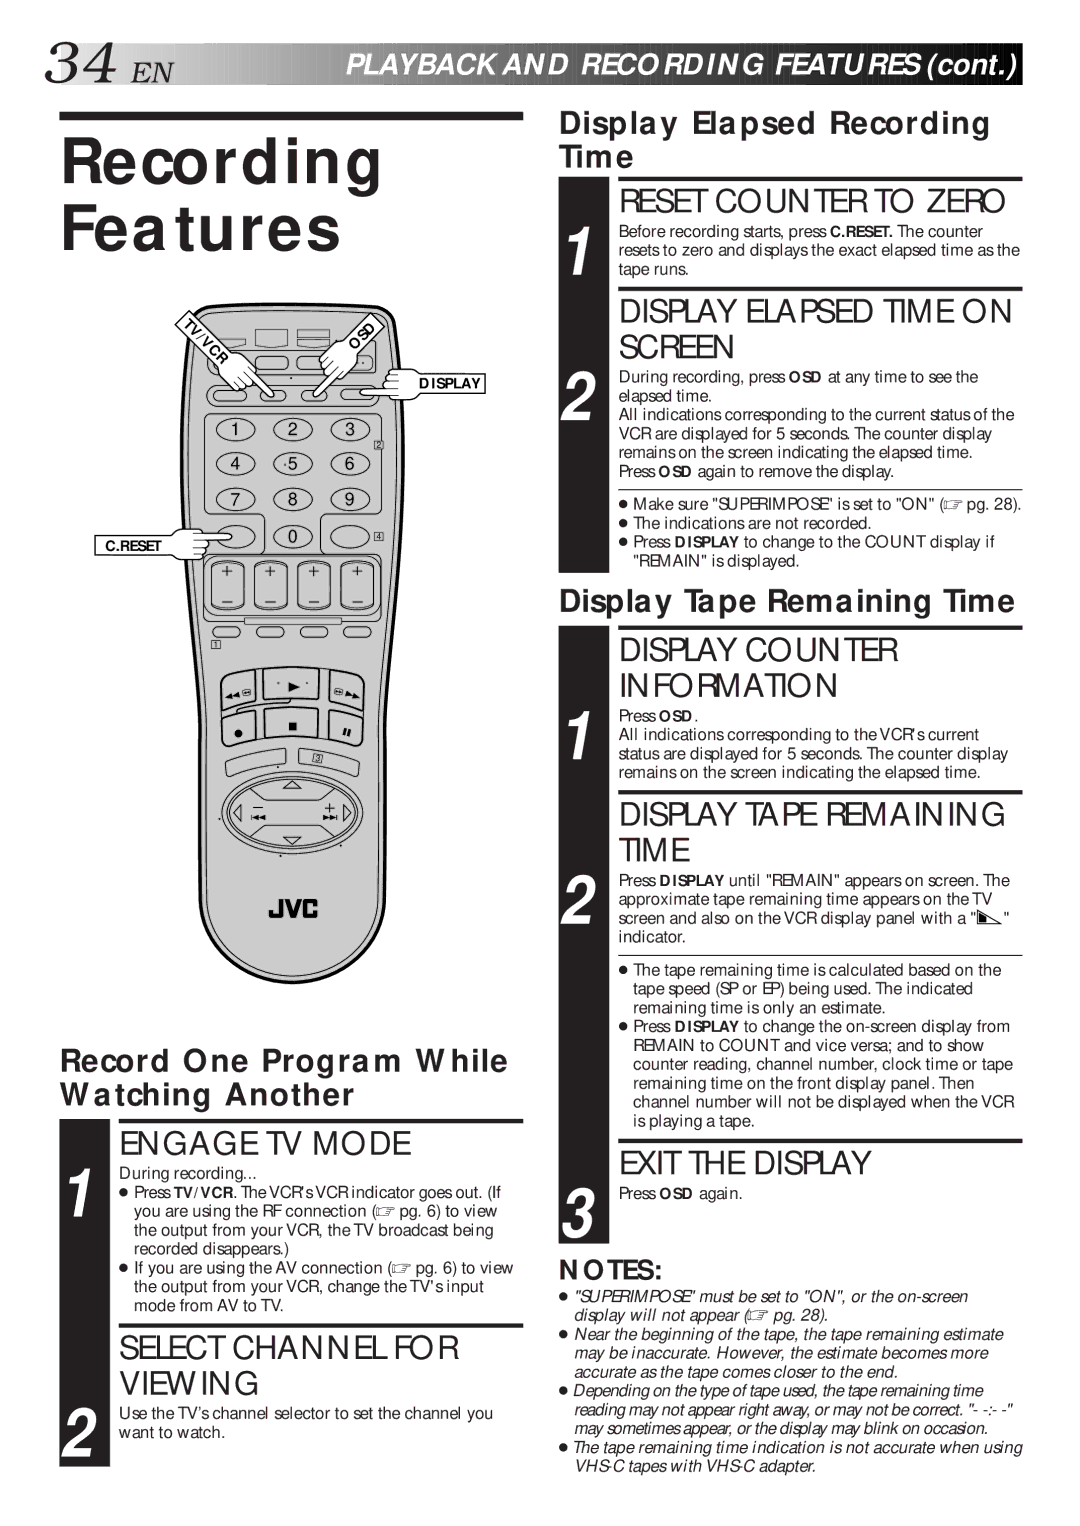 JVC HR-S4500U manual Recording Features 